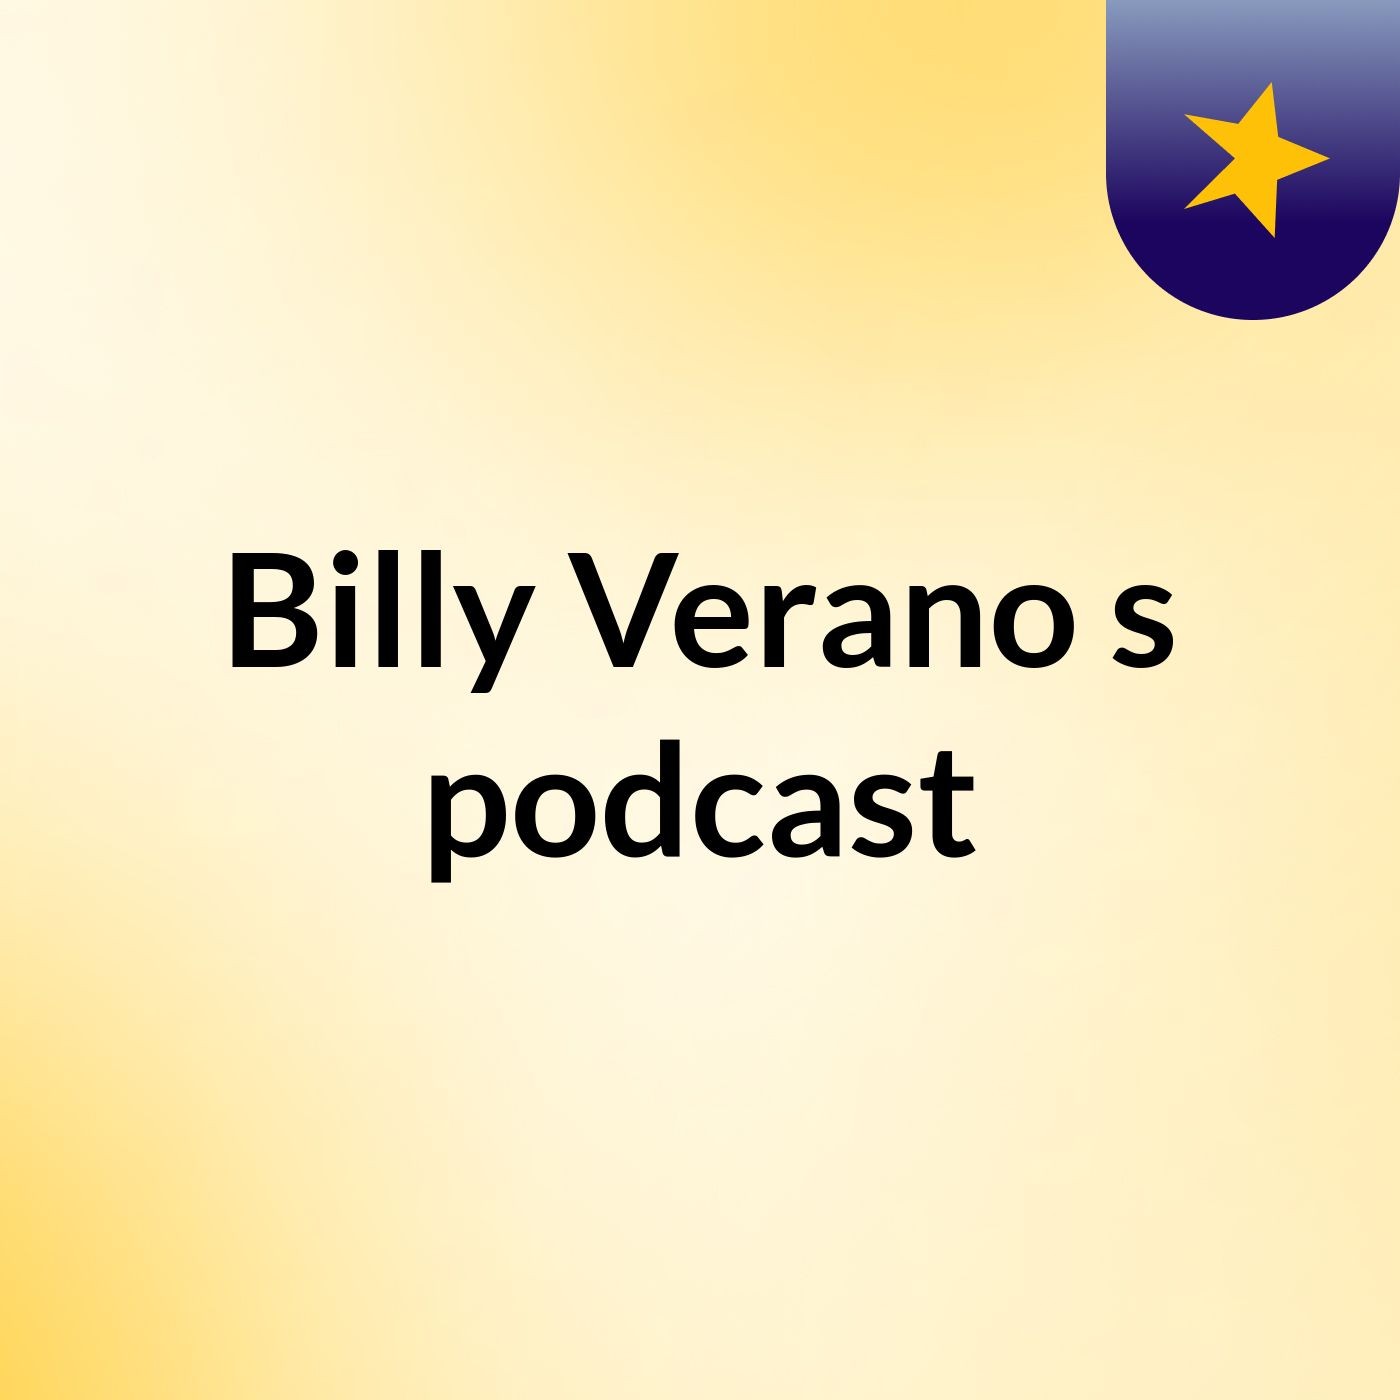 Billy Verano's podcast